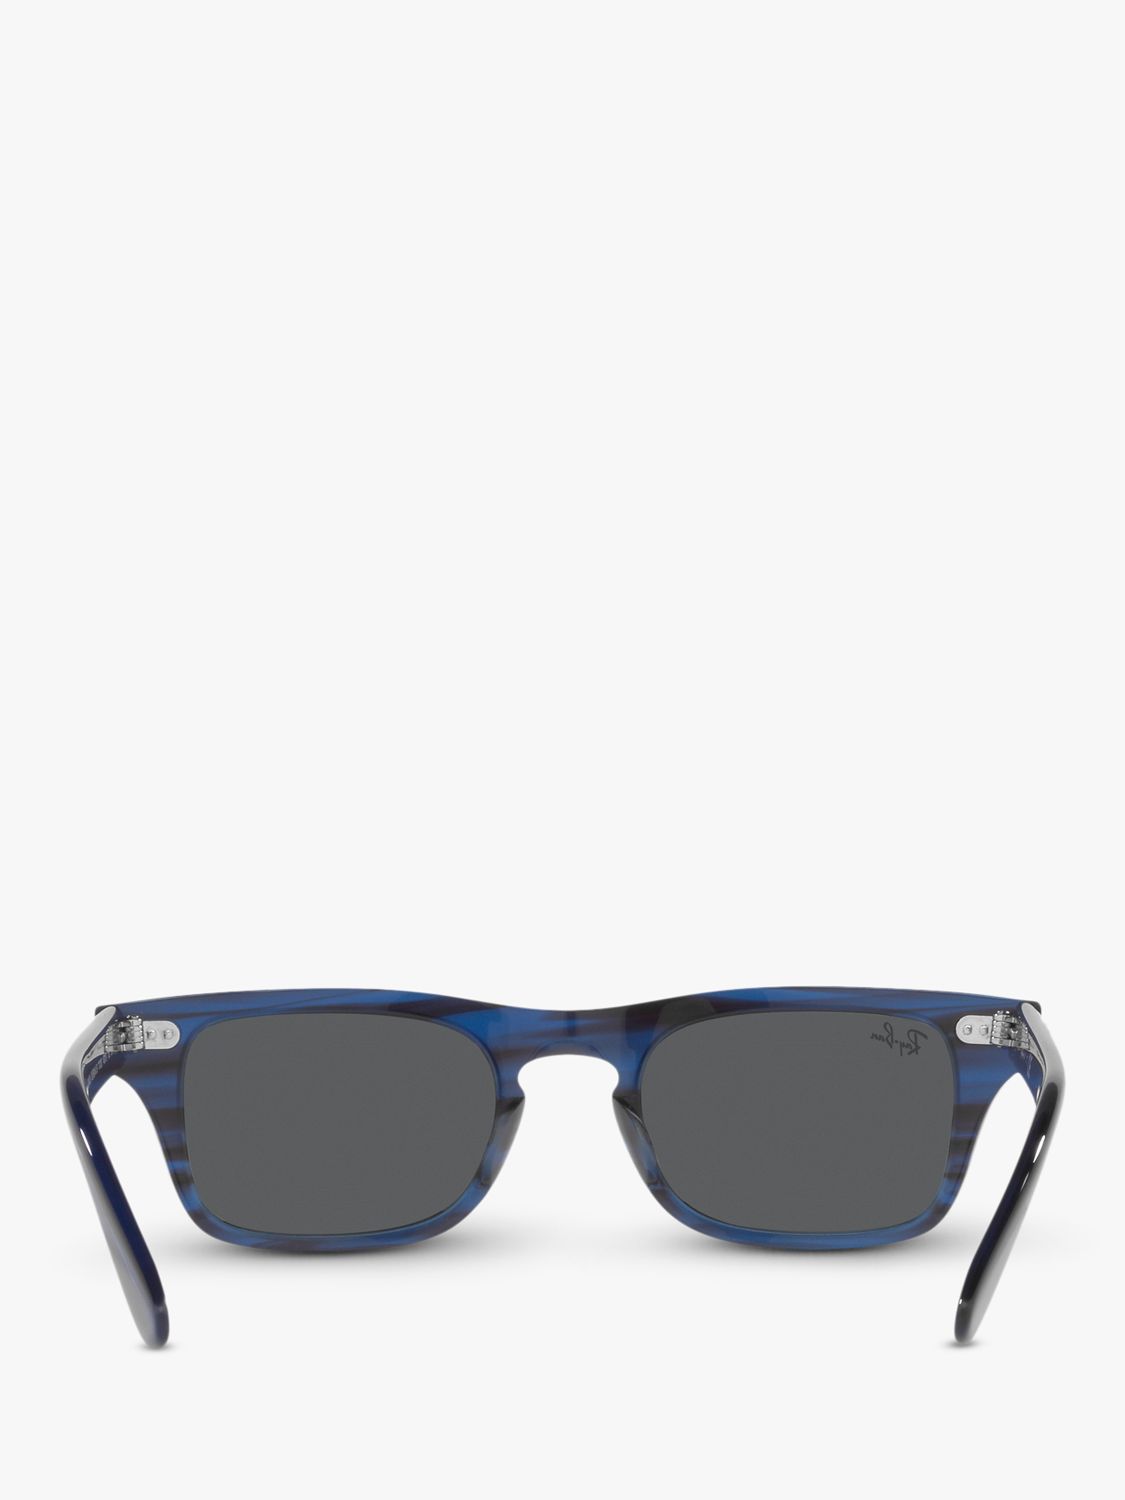 Buy Ray-Ban Junior RJ9083S Burbank Rectangular Sunglasses, Striped Blue/Grey Online at johnlewis.com